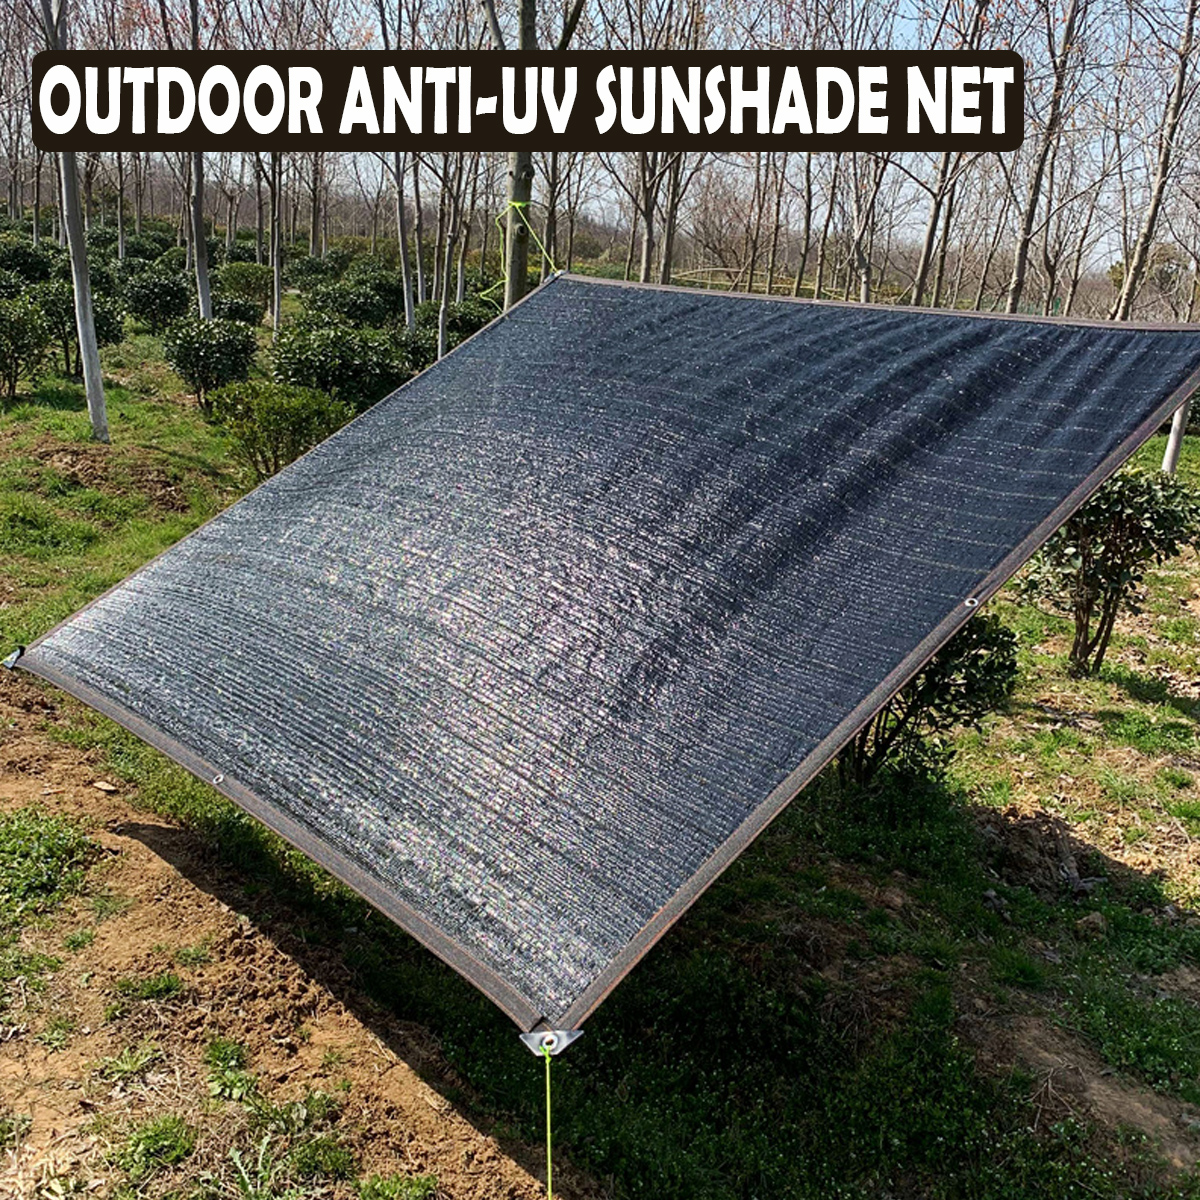 Anti-UV-Sunshade-Net-Garden-Sunscreen-Sunblock-Shade-Cloth-Net-Plant-Greenhouse-Cover-Outdoor-Car-Co-1611706-3